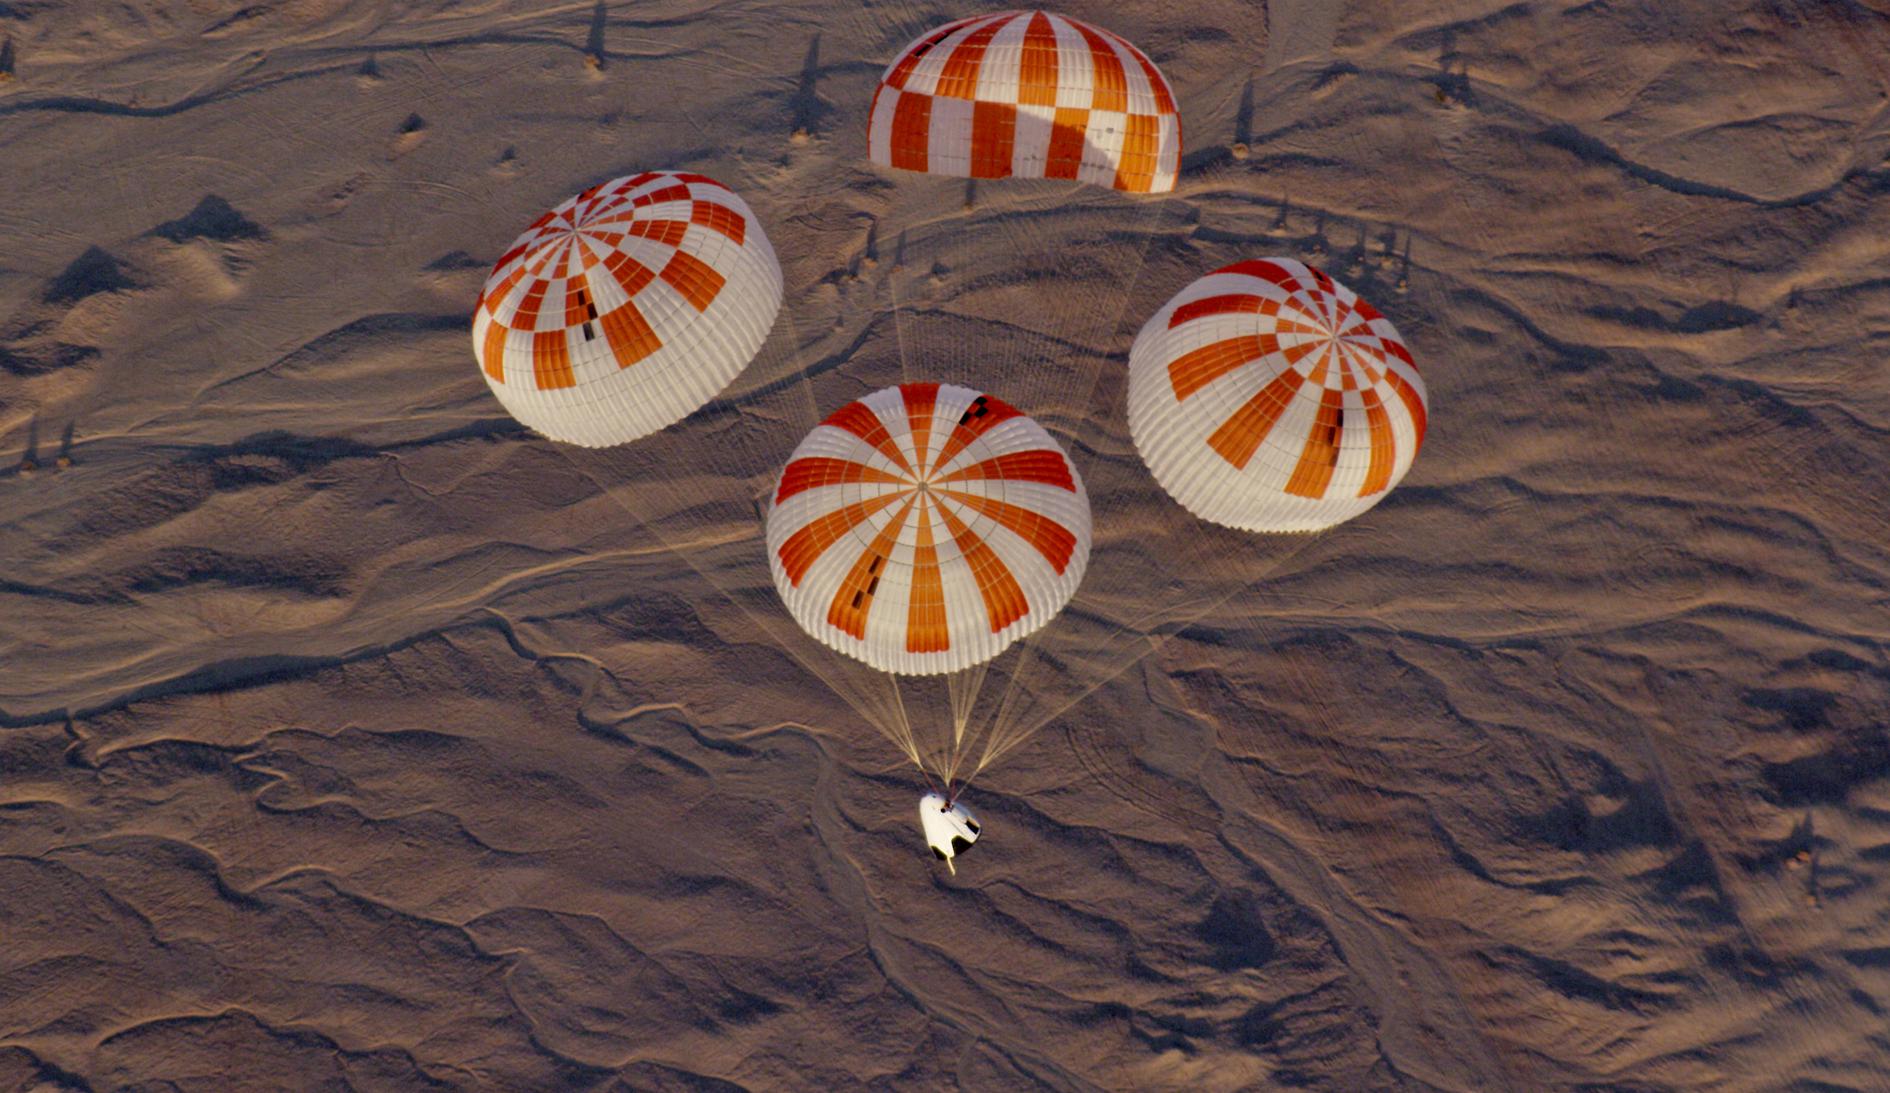 Crew Dragon parachute testing July 2018 (SpaceX) 1